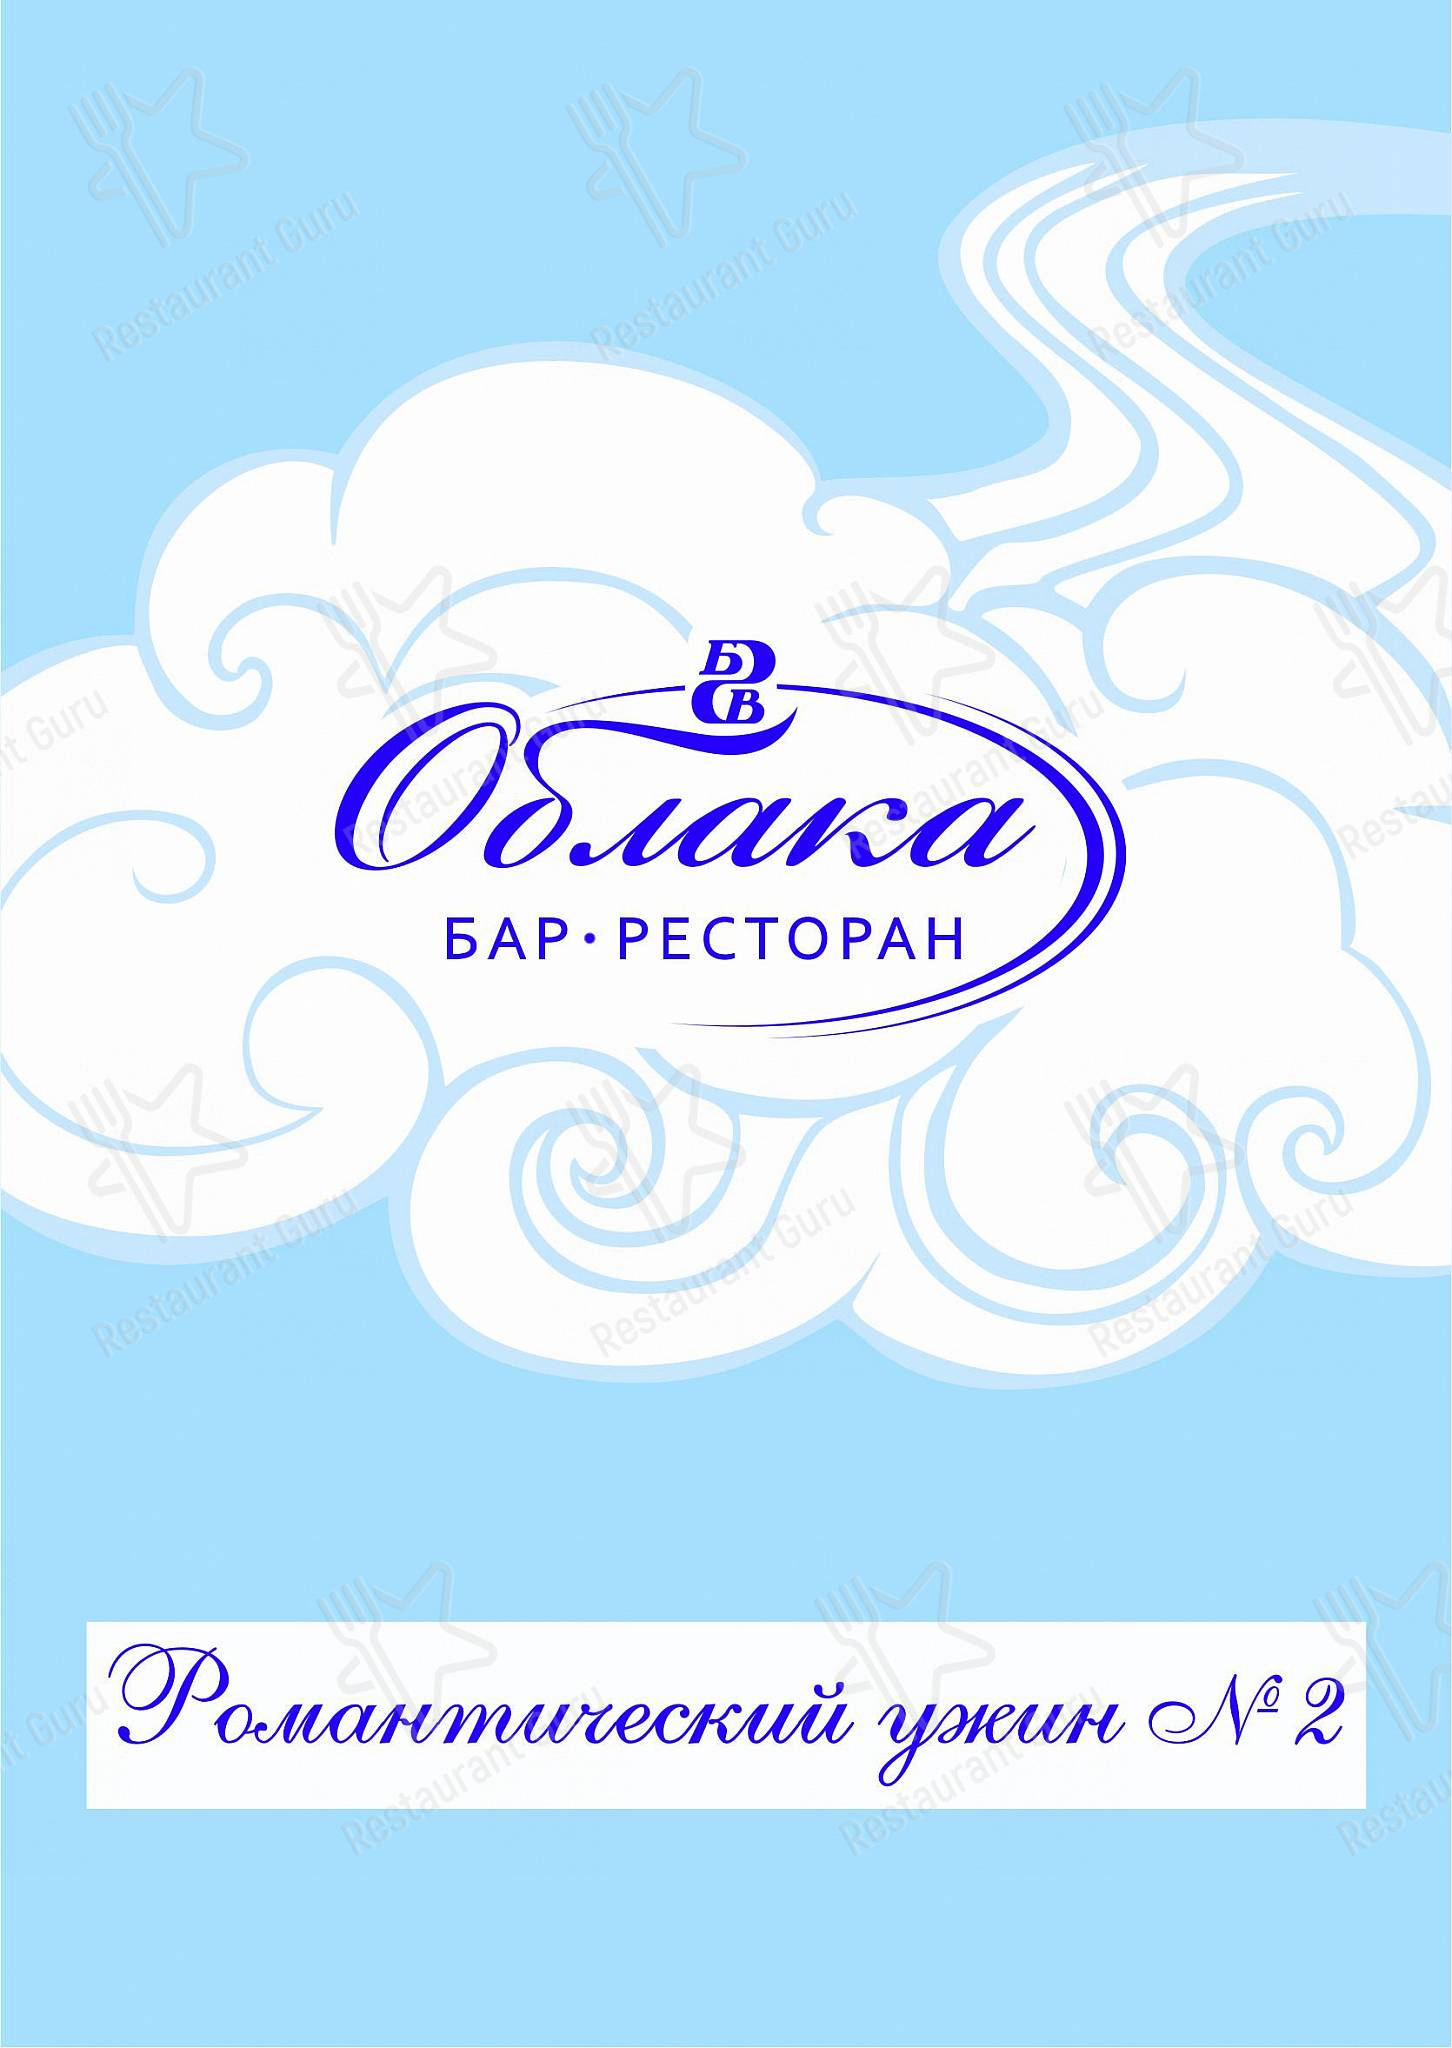 Ресторан облака челябинск